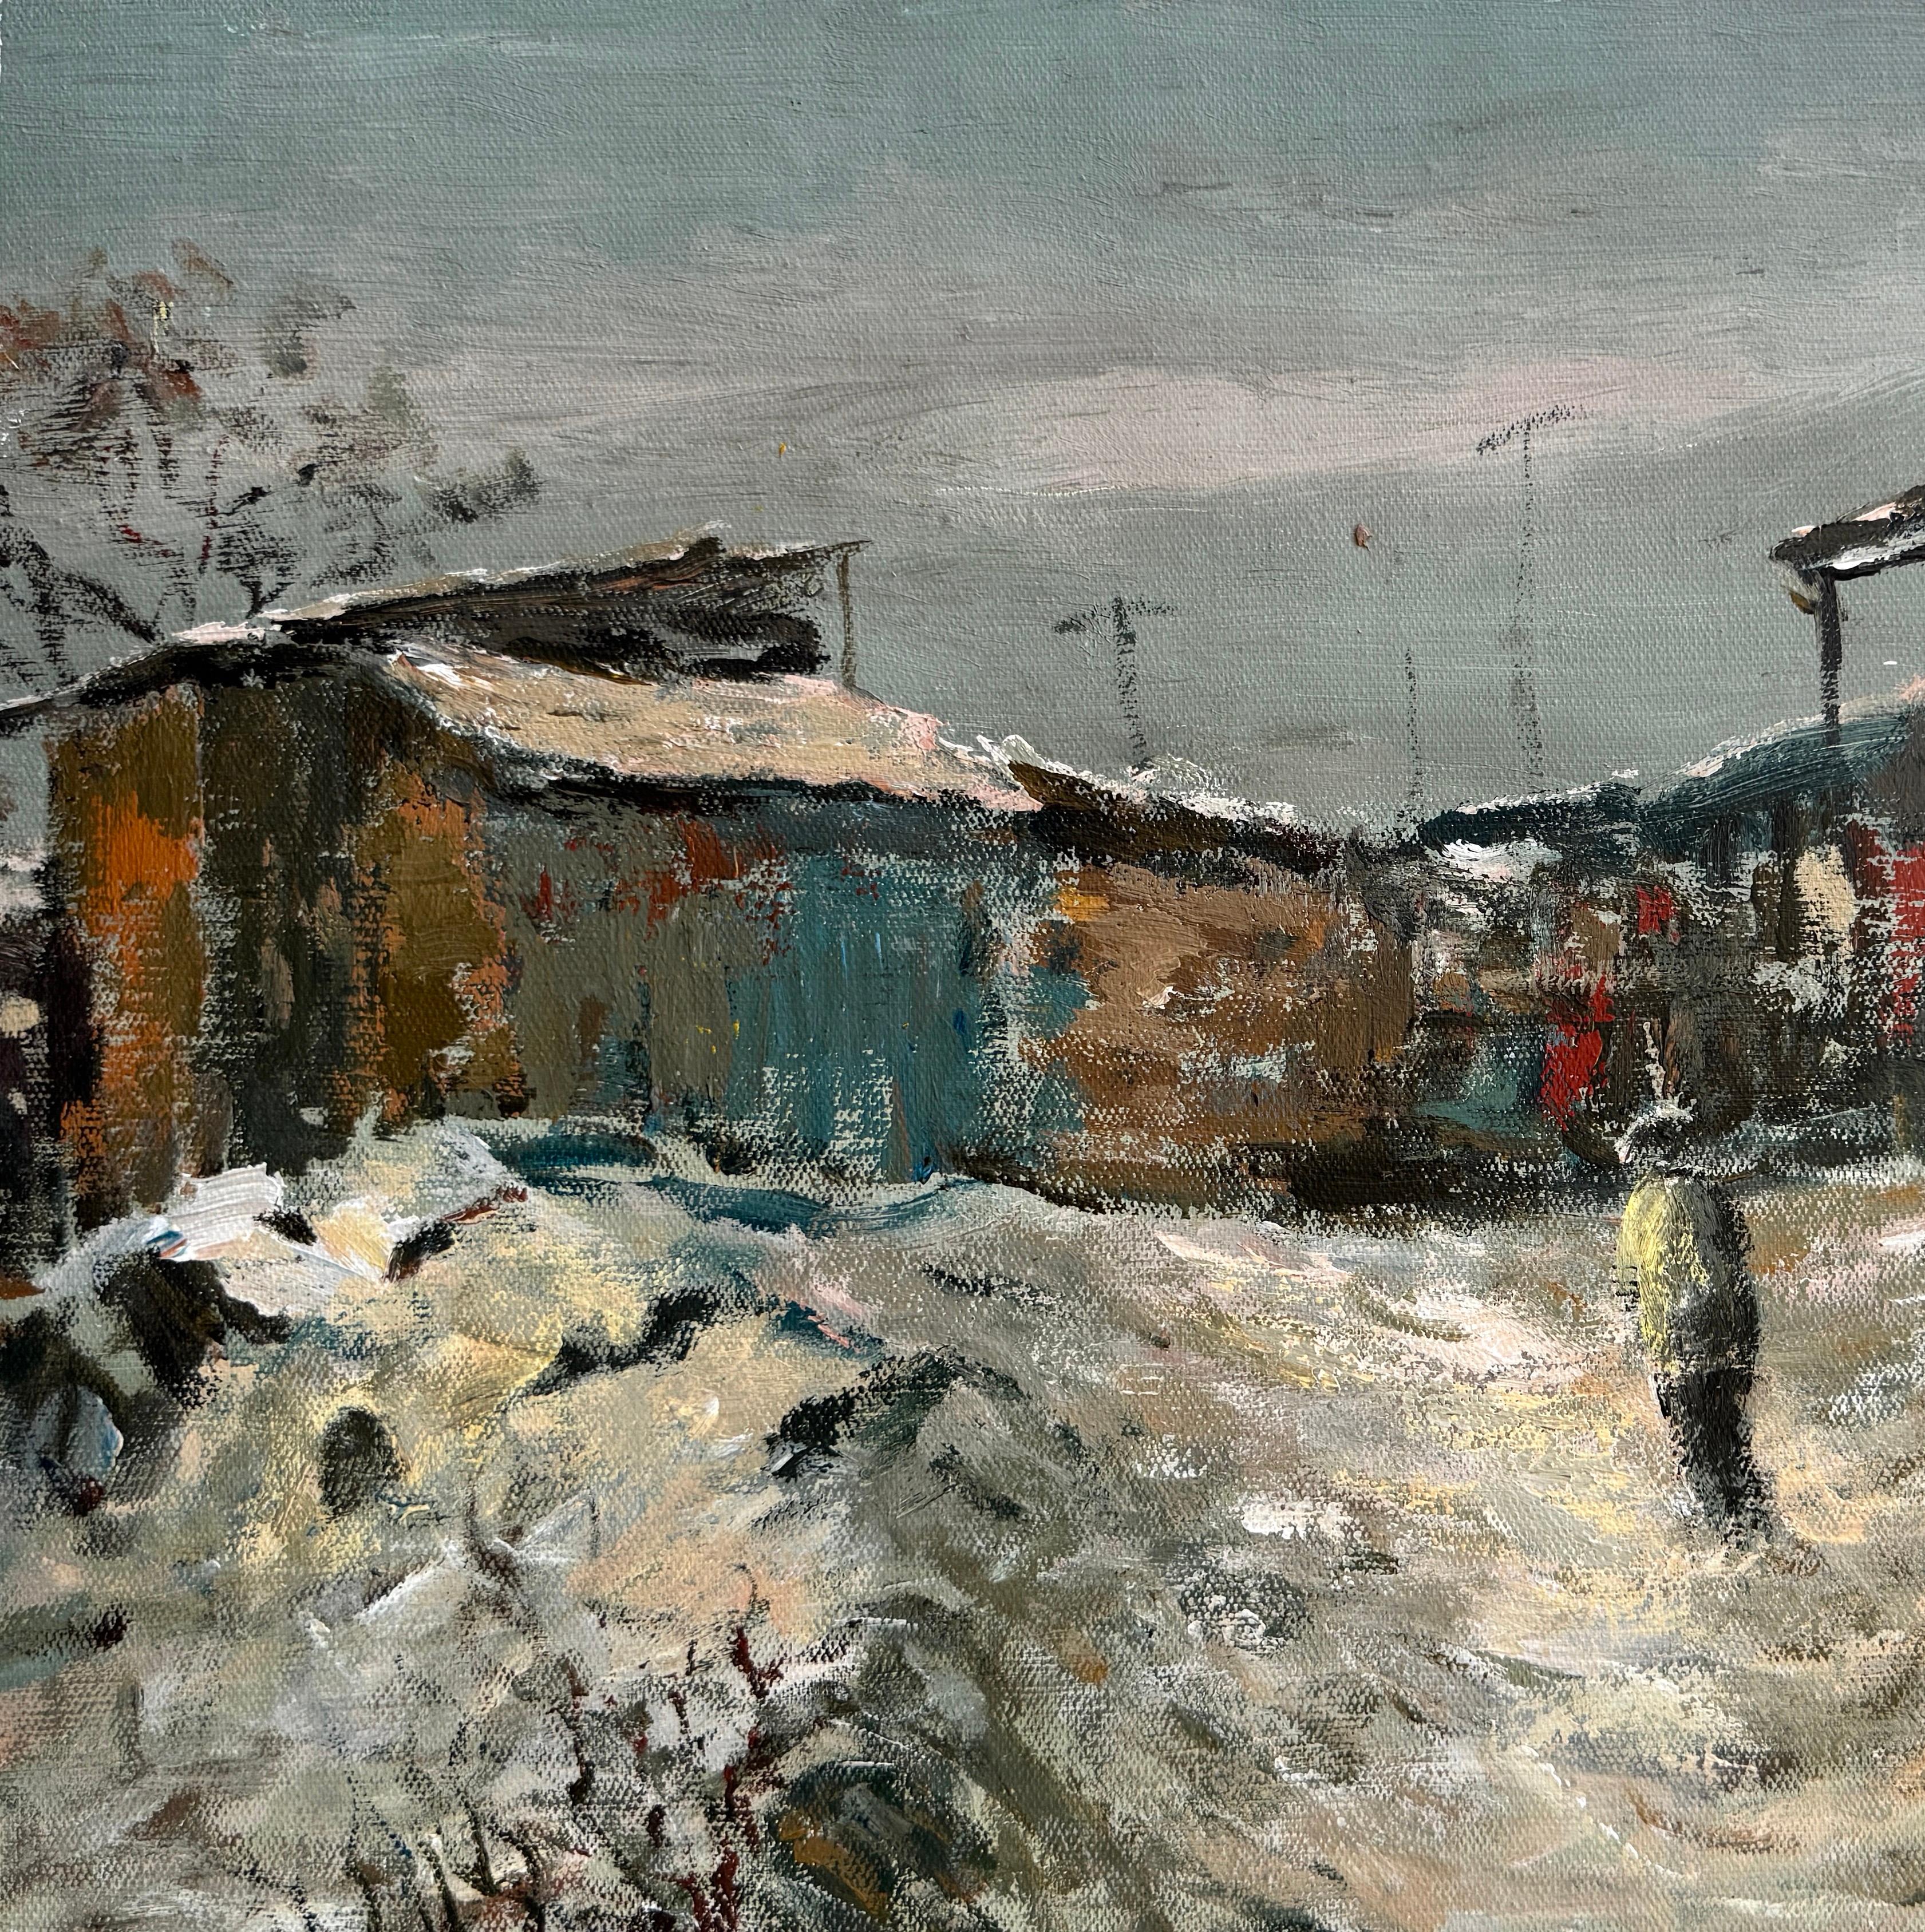 Artist: Ara H. Hakobyan
Work: Original Oil Painting, Handmade Artwork, One of a Kind
Medium: Oil on Canvas
Year: 2016
Style: Impressionism
Title: Cold Winter
Size: 14